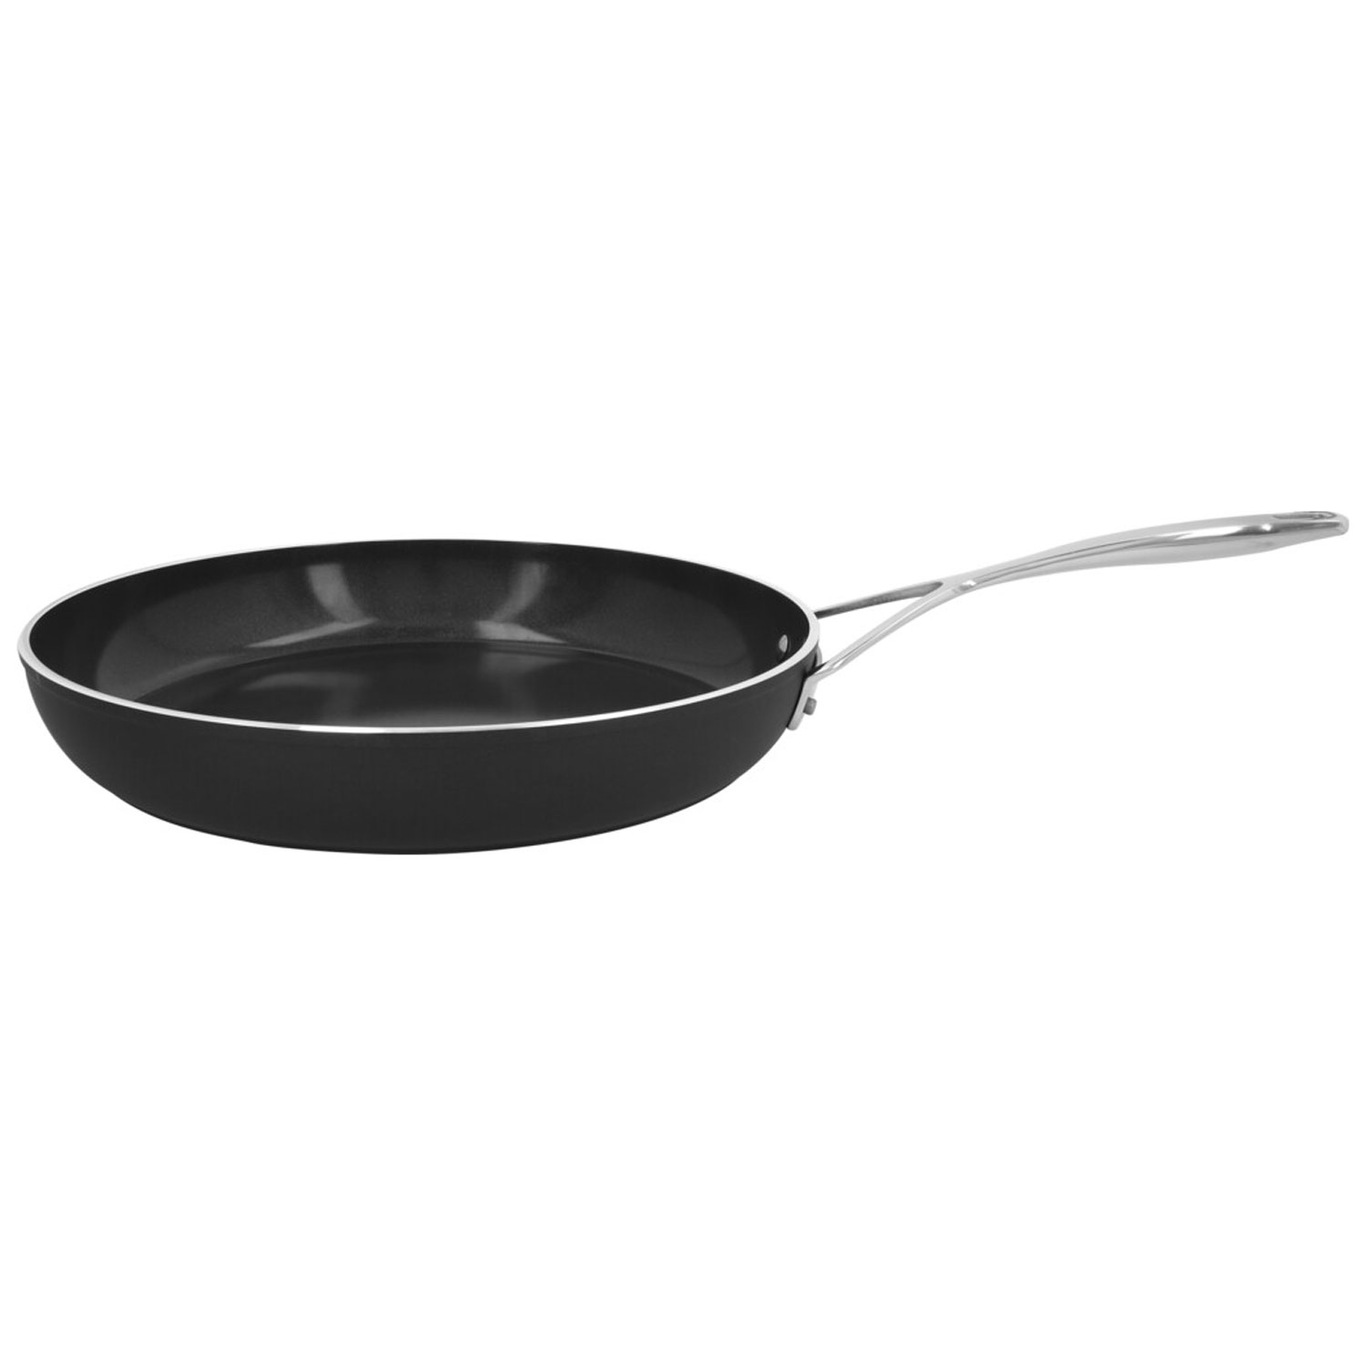 Alu Pro 5 Frying Pan, 32 cm